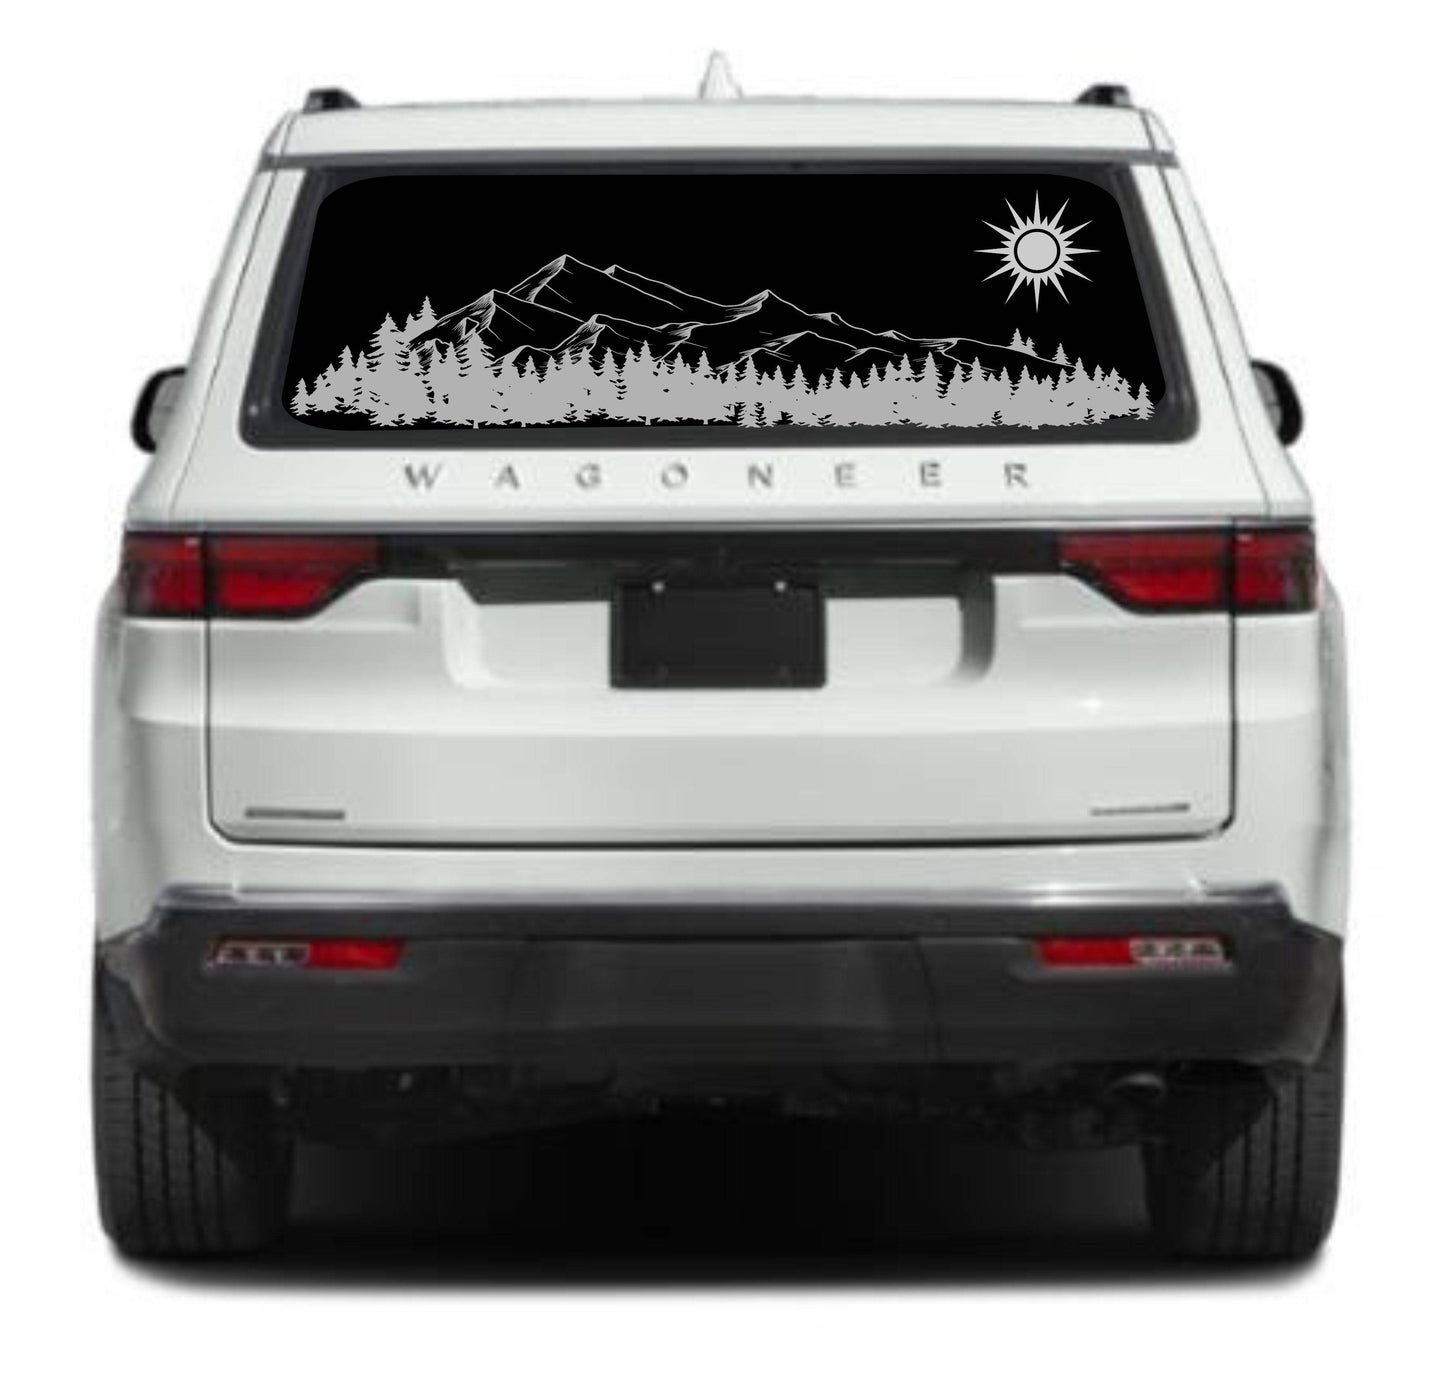 Mountain Silhouette Vinyl Decal for Jeep Wagoneer's Rear Window